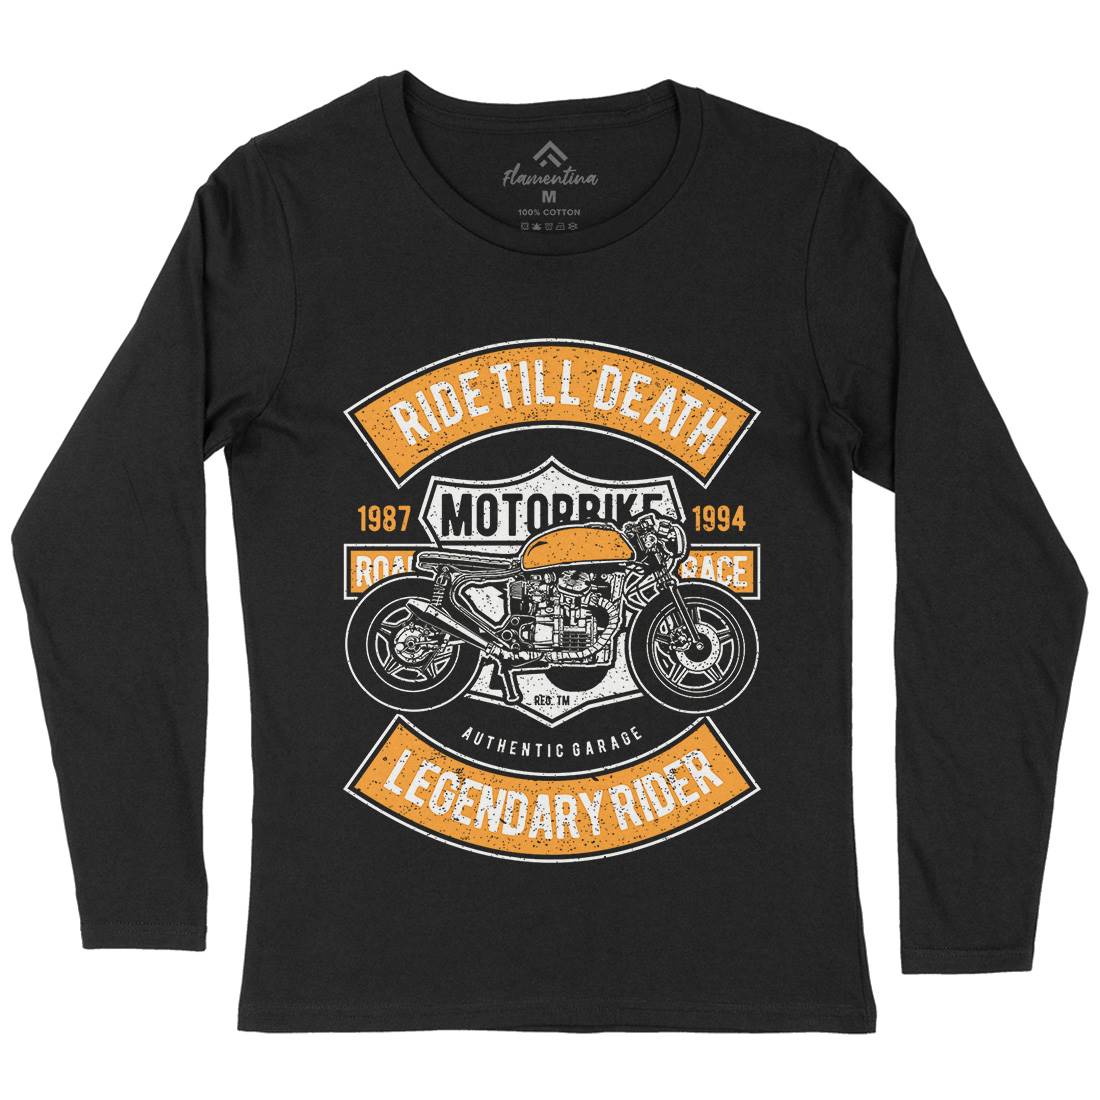 Ride Till Death Womens Long Sleeve T-Shirt Motorcycles A743